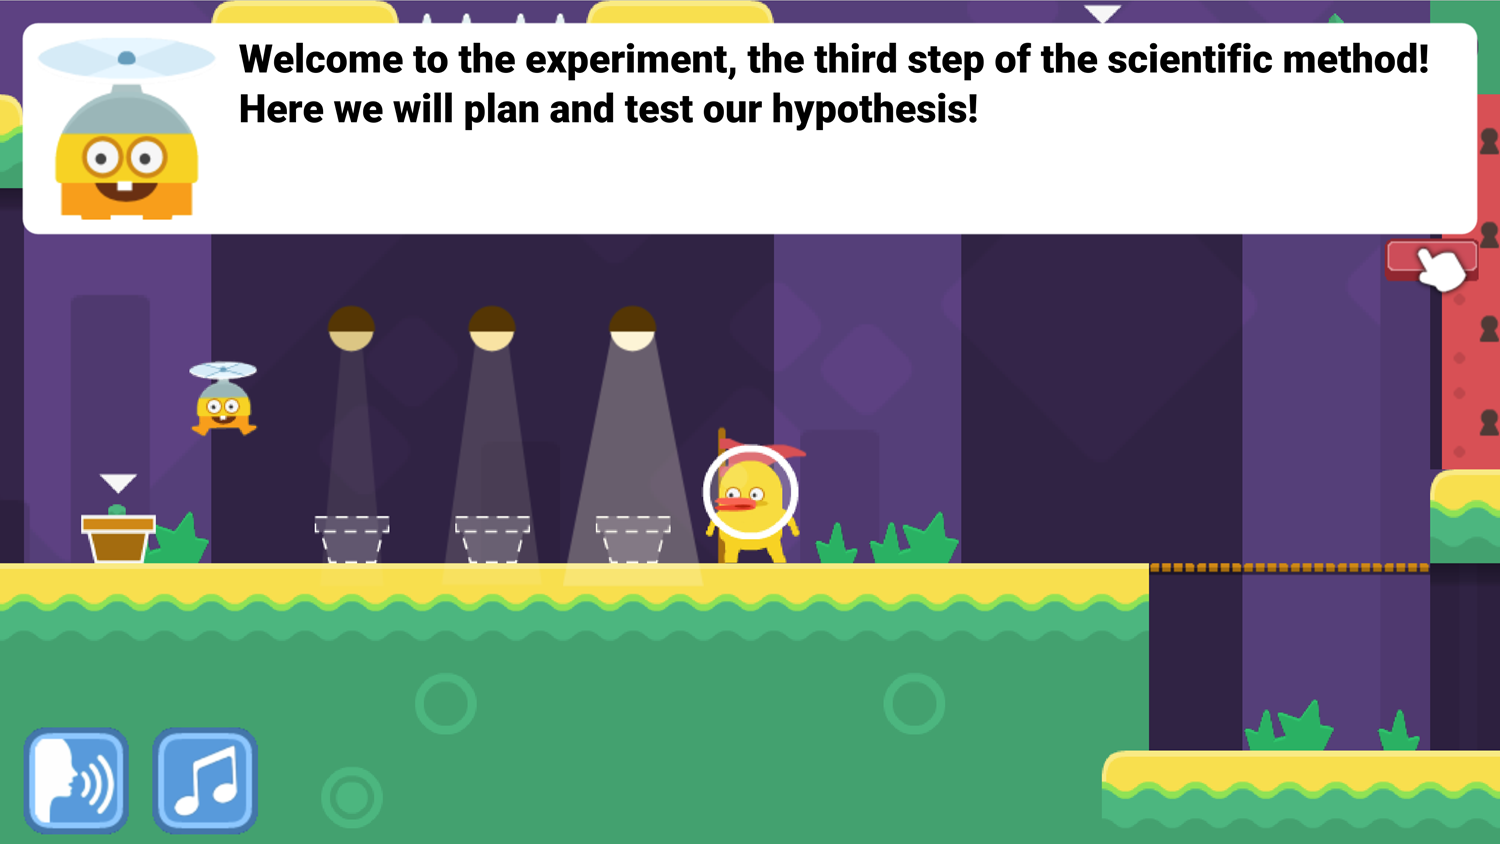 DocDuck Scientific Method Game Experiment to Test Hypothesis Screenshot.